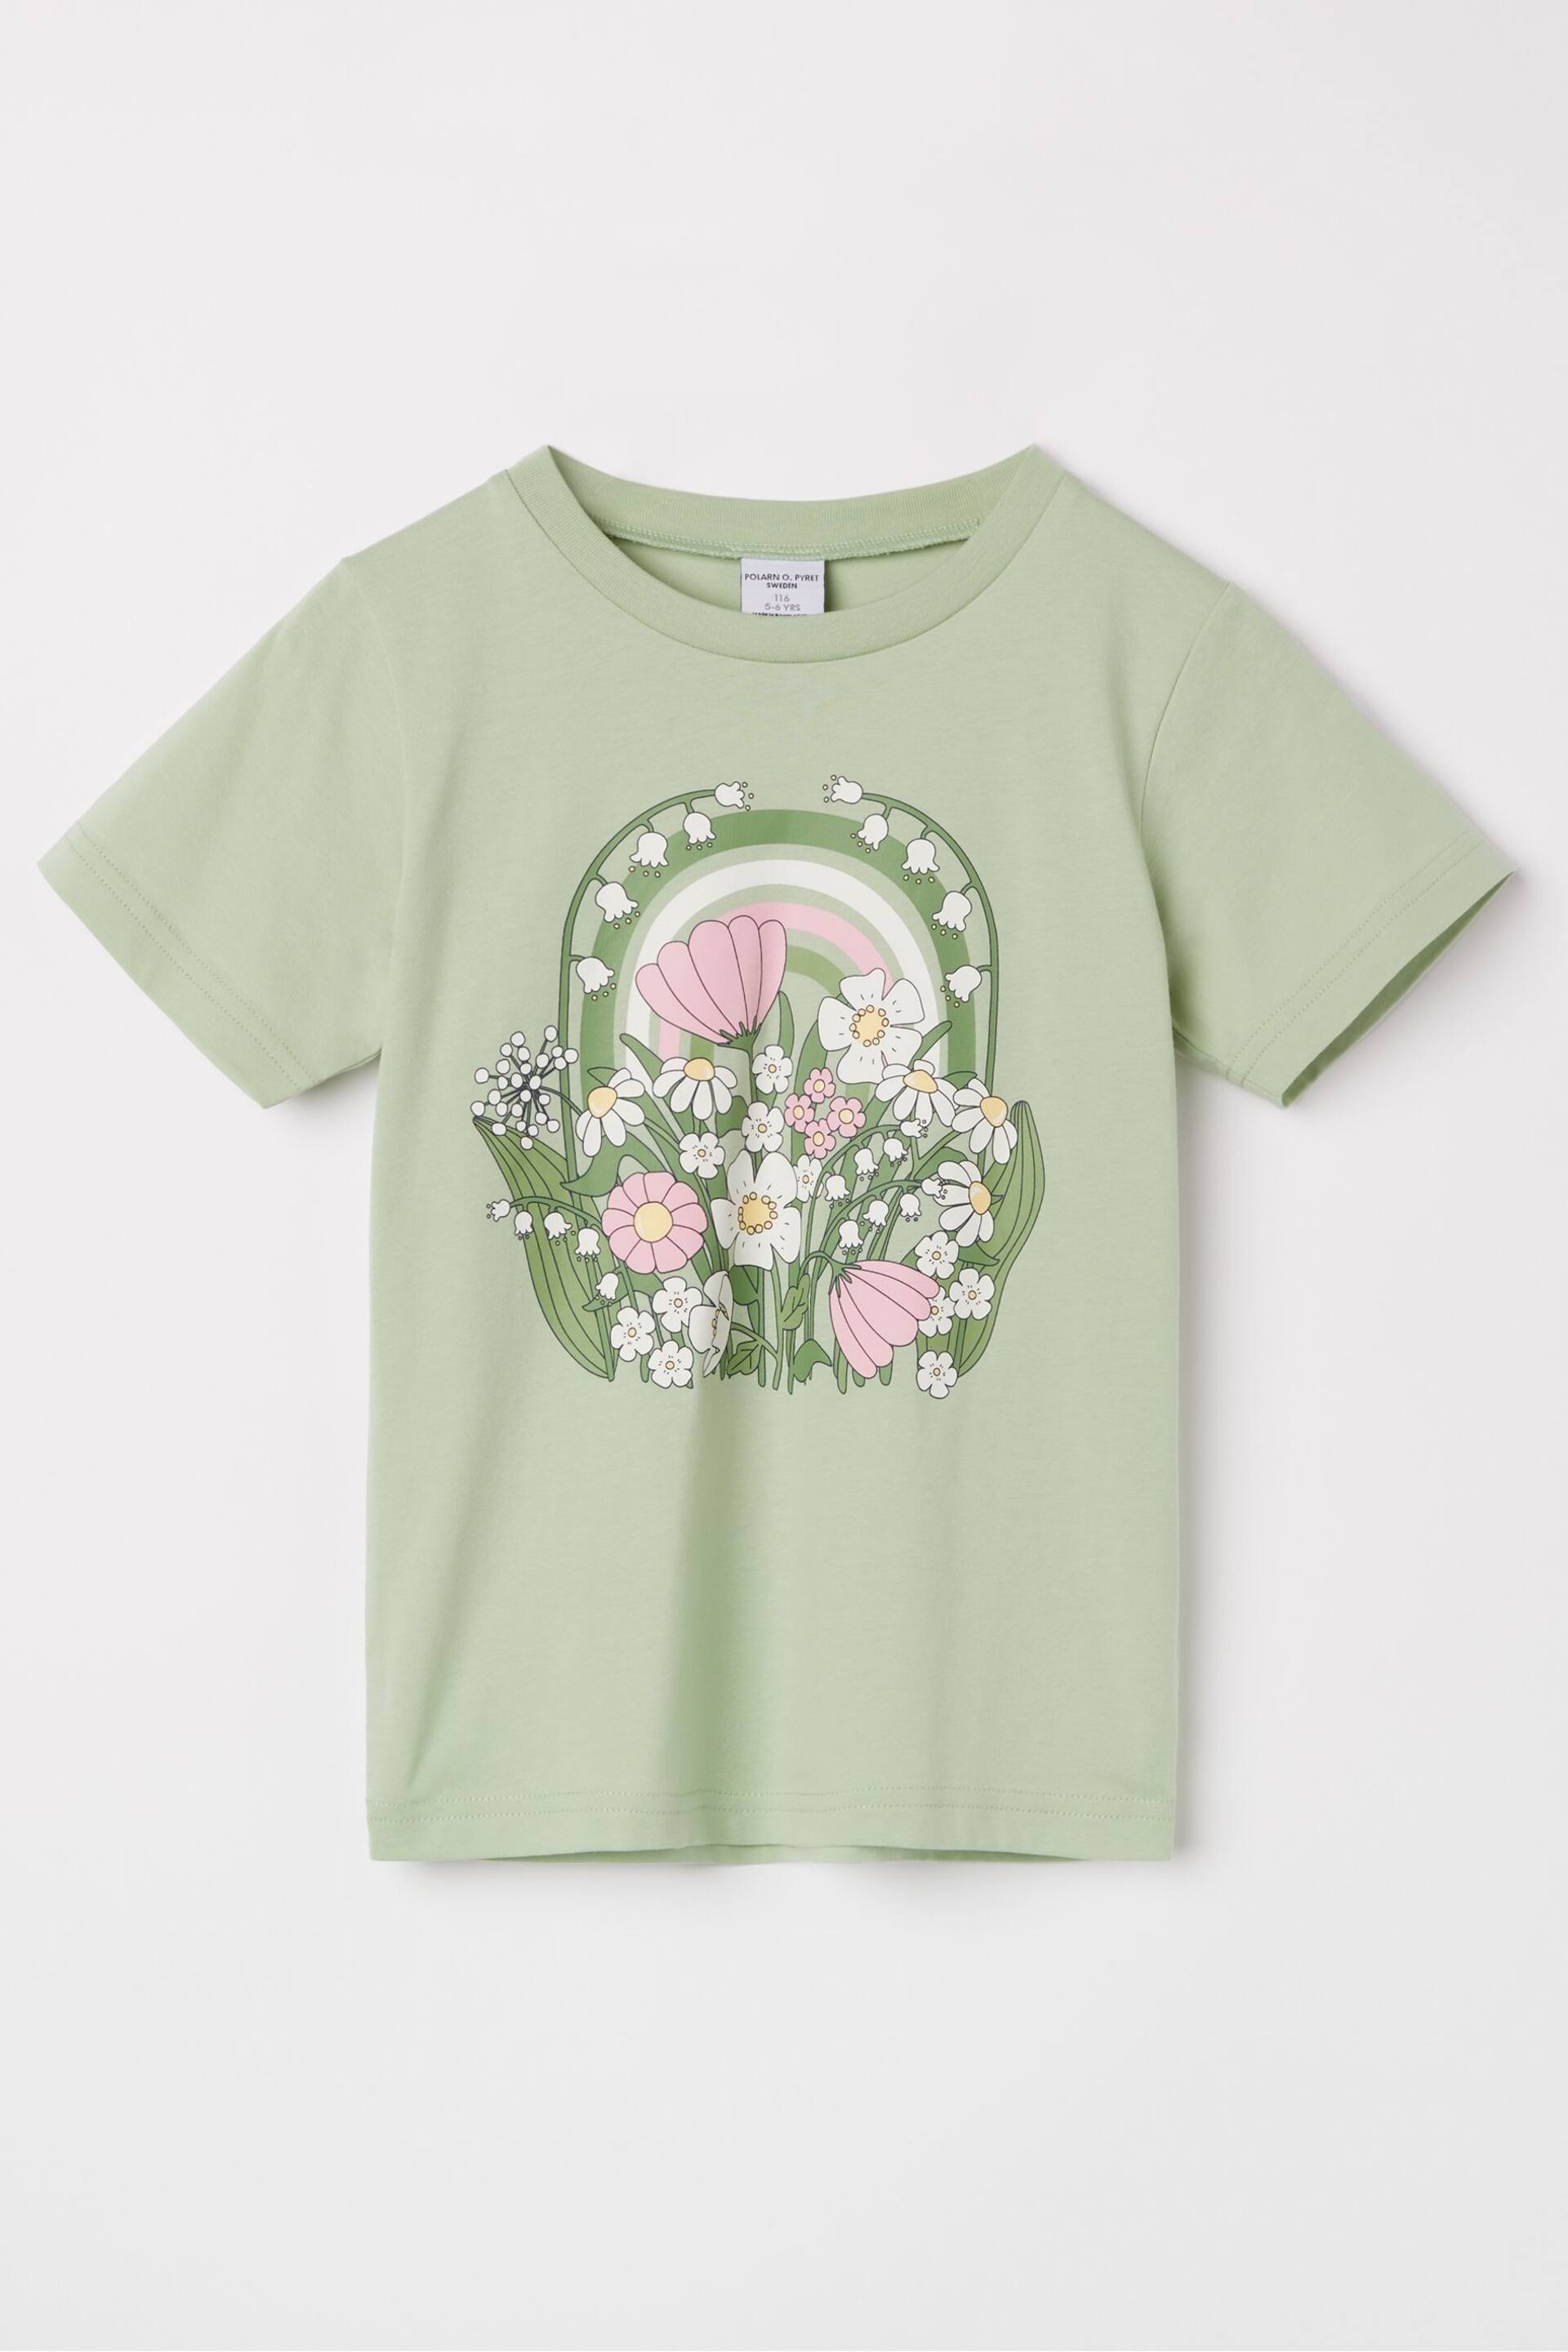 Polarn O Pyret  Organic Cotton Floral Print T-Shirt - Image 1 of 2